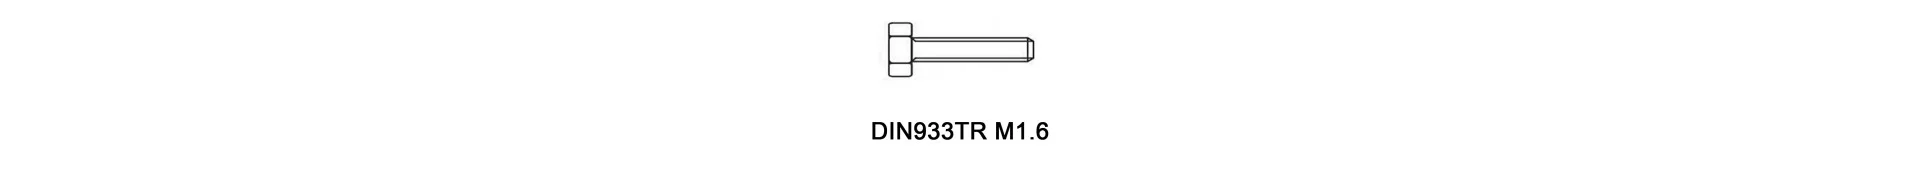 DIN933TR M1.6